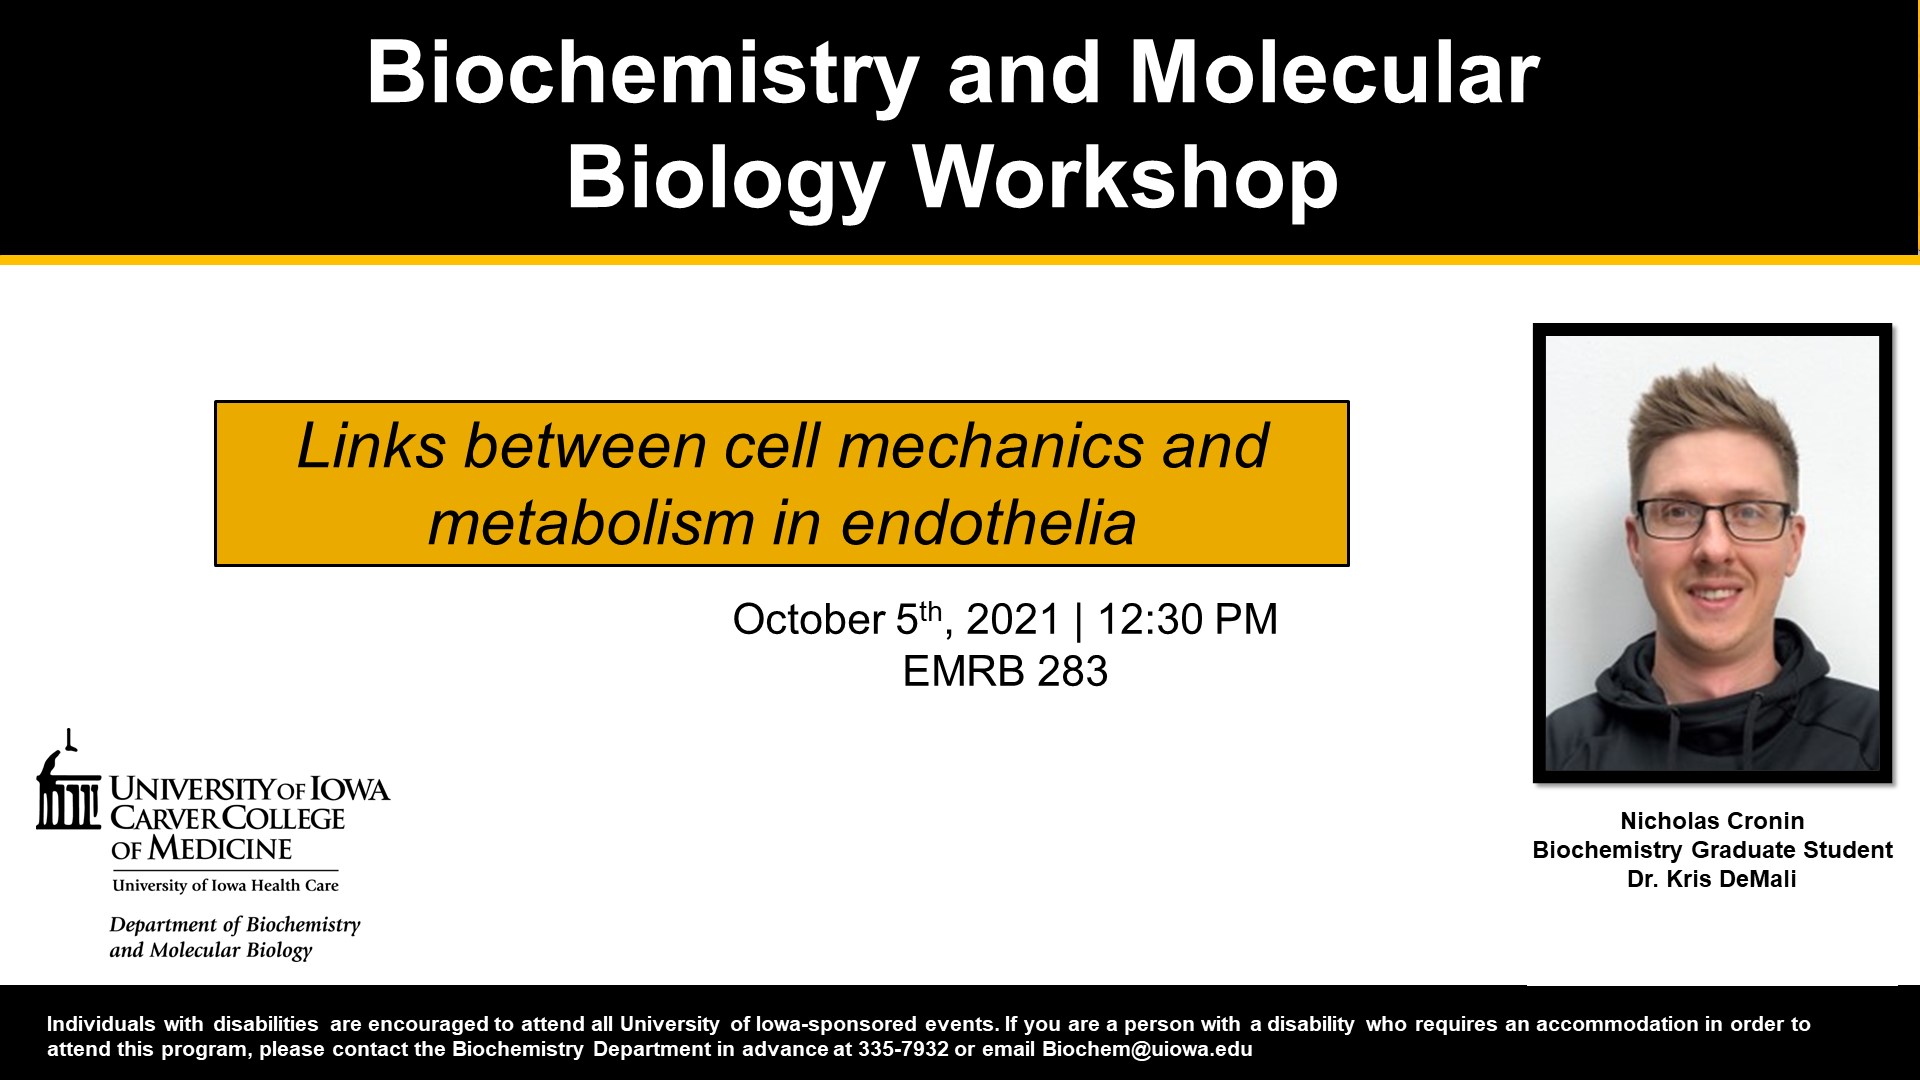 Biochemistry Workshop: Nicholas Cronin promotional image